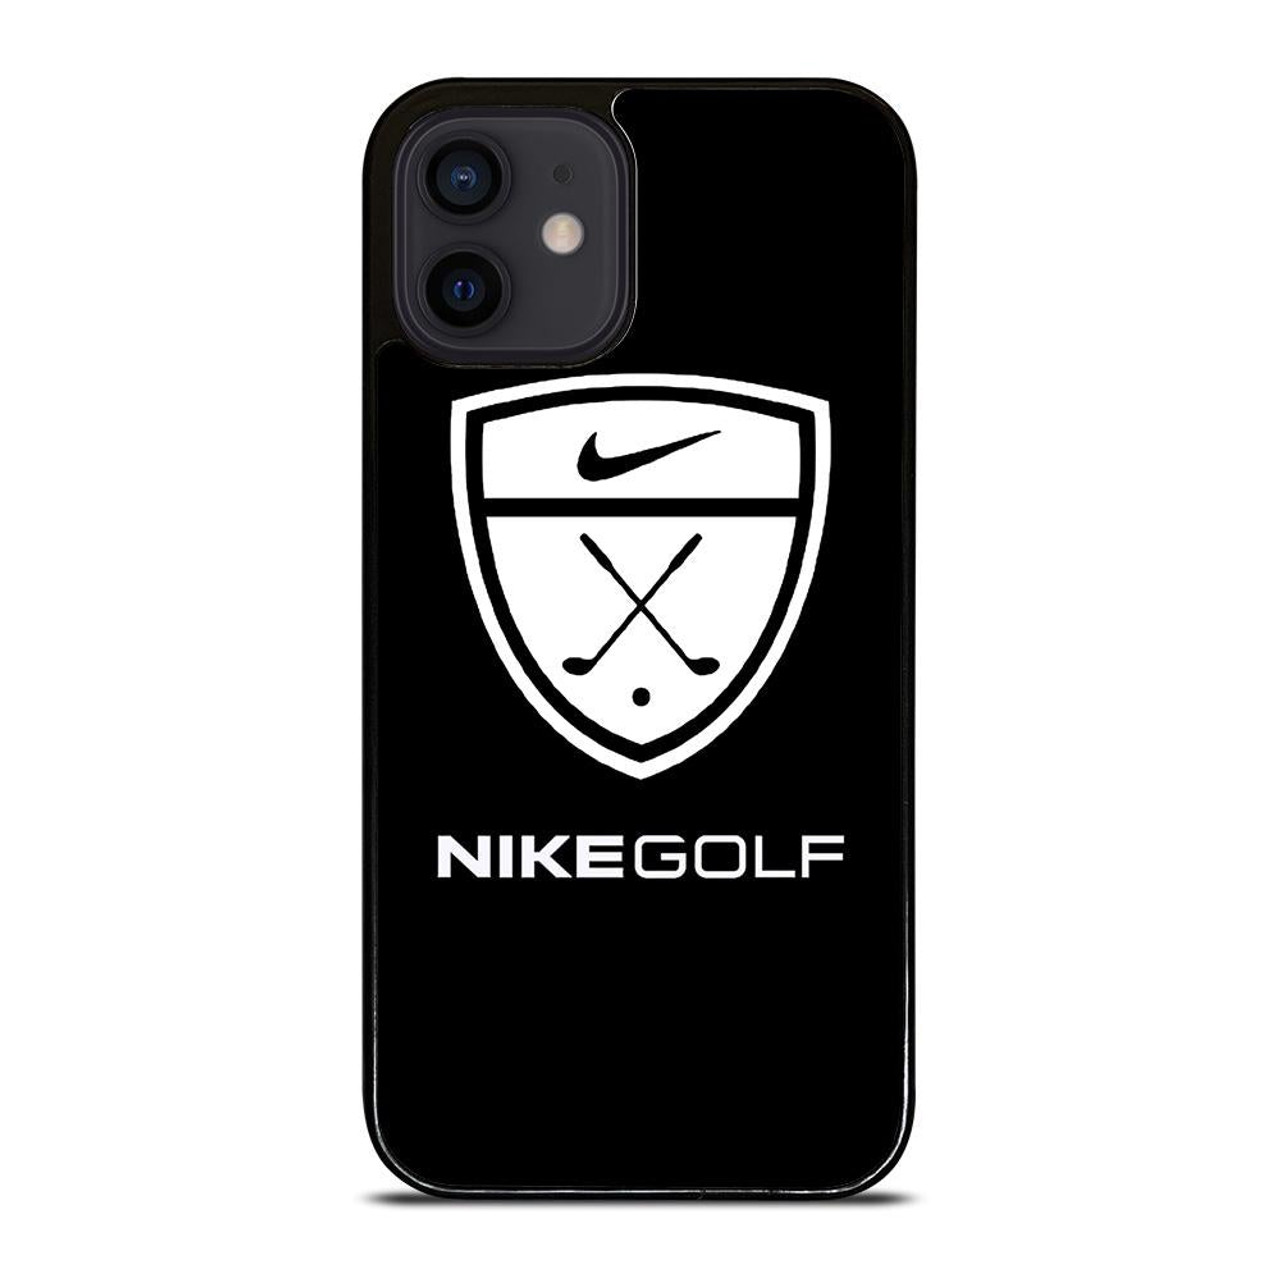 nike golf logo